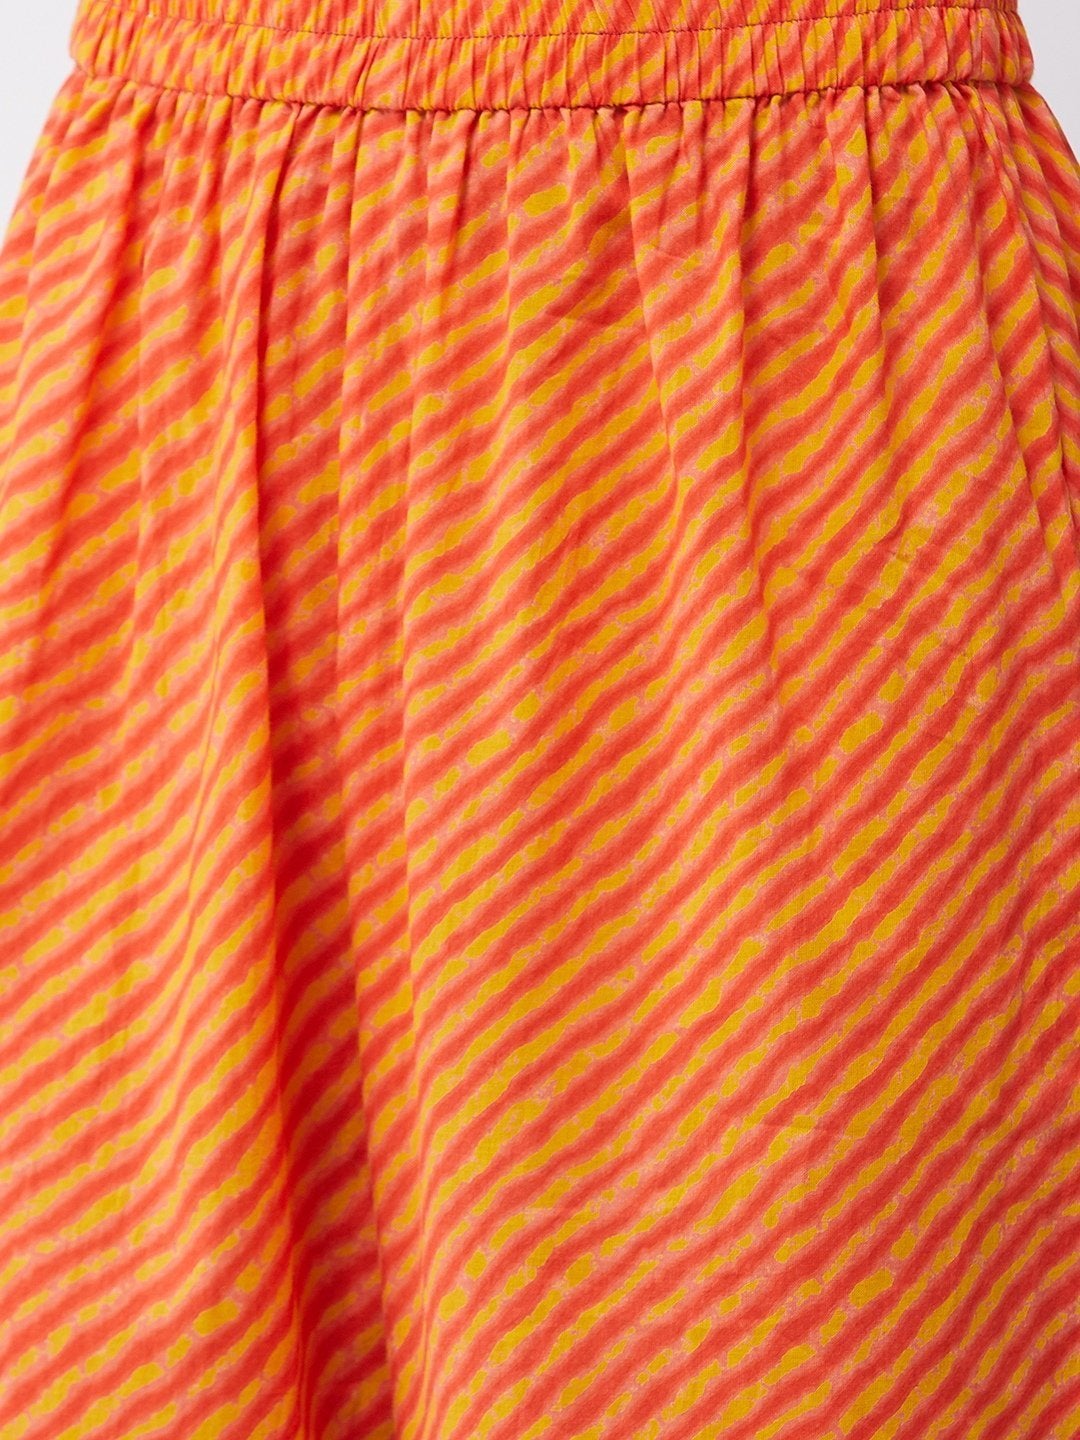 Women's Turquoise Orange Kurta Pant Set - InWeave